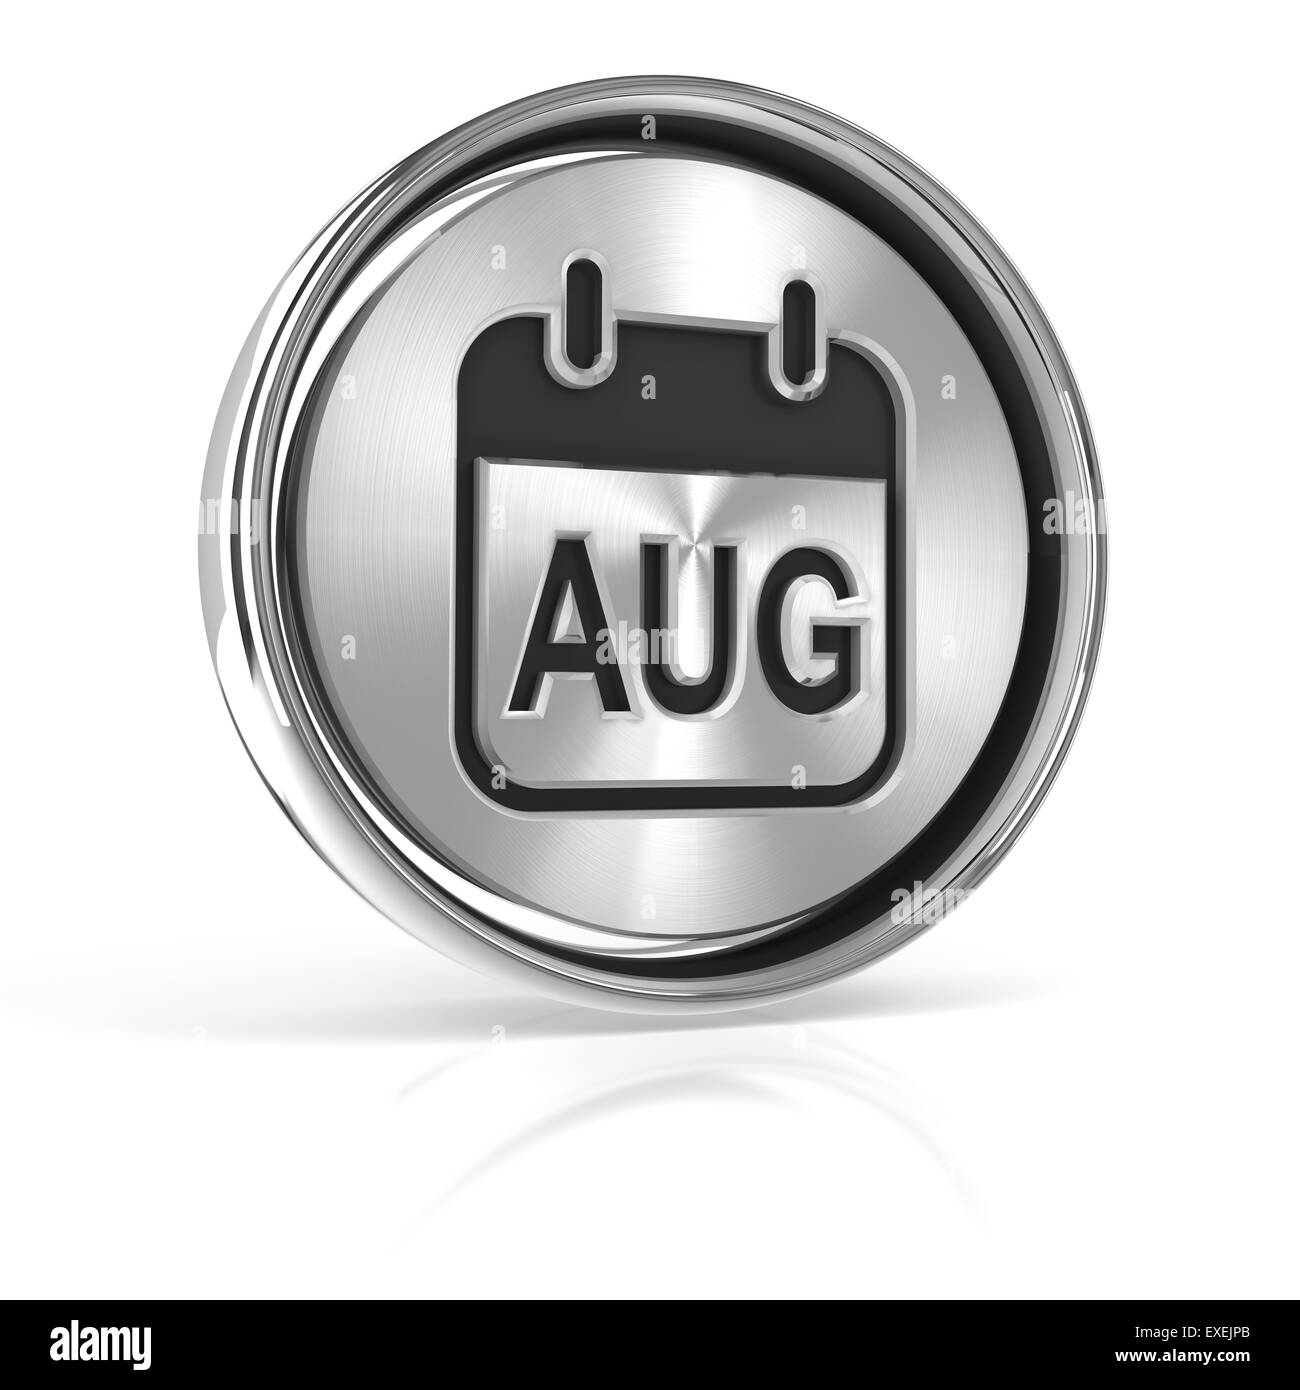 Metallic August calendar icon Stock Photo